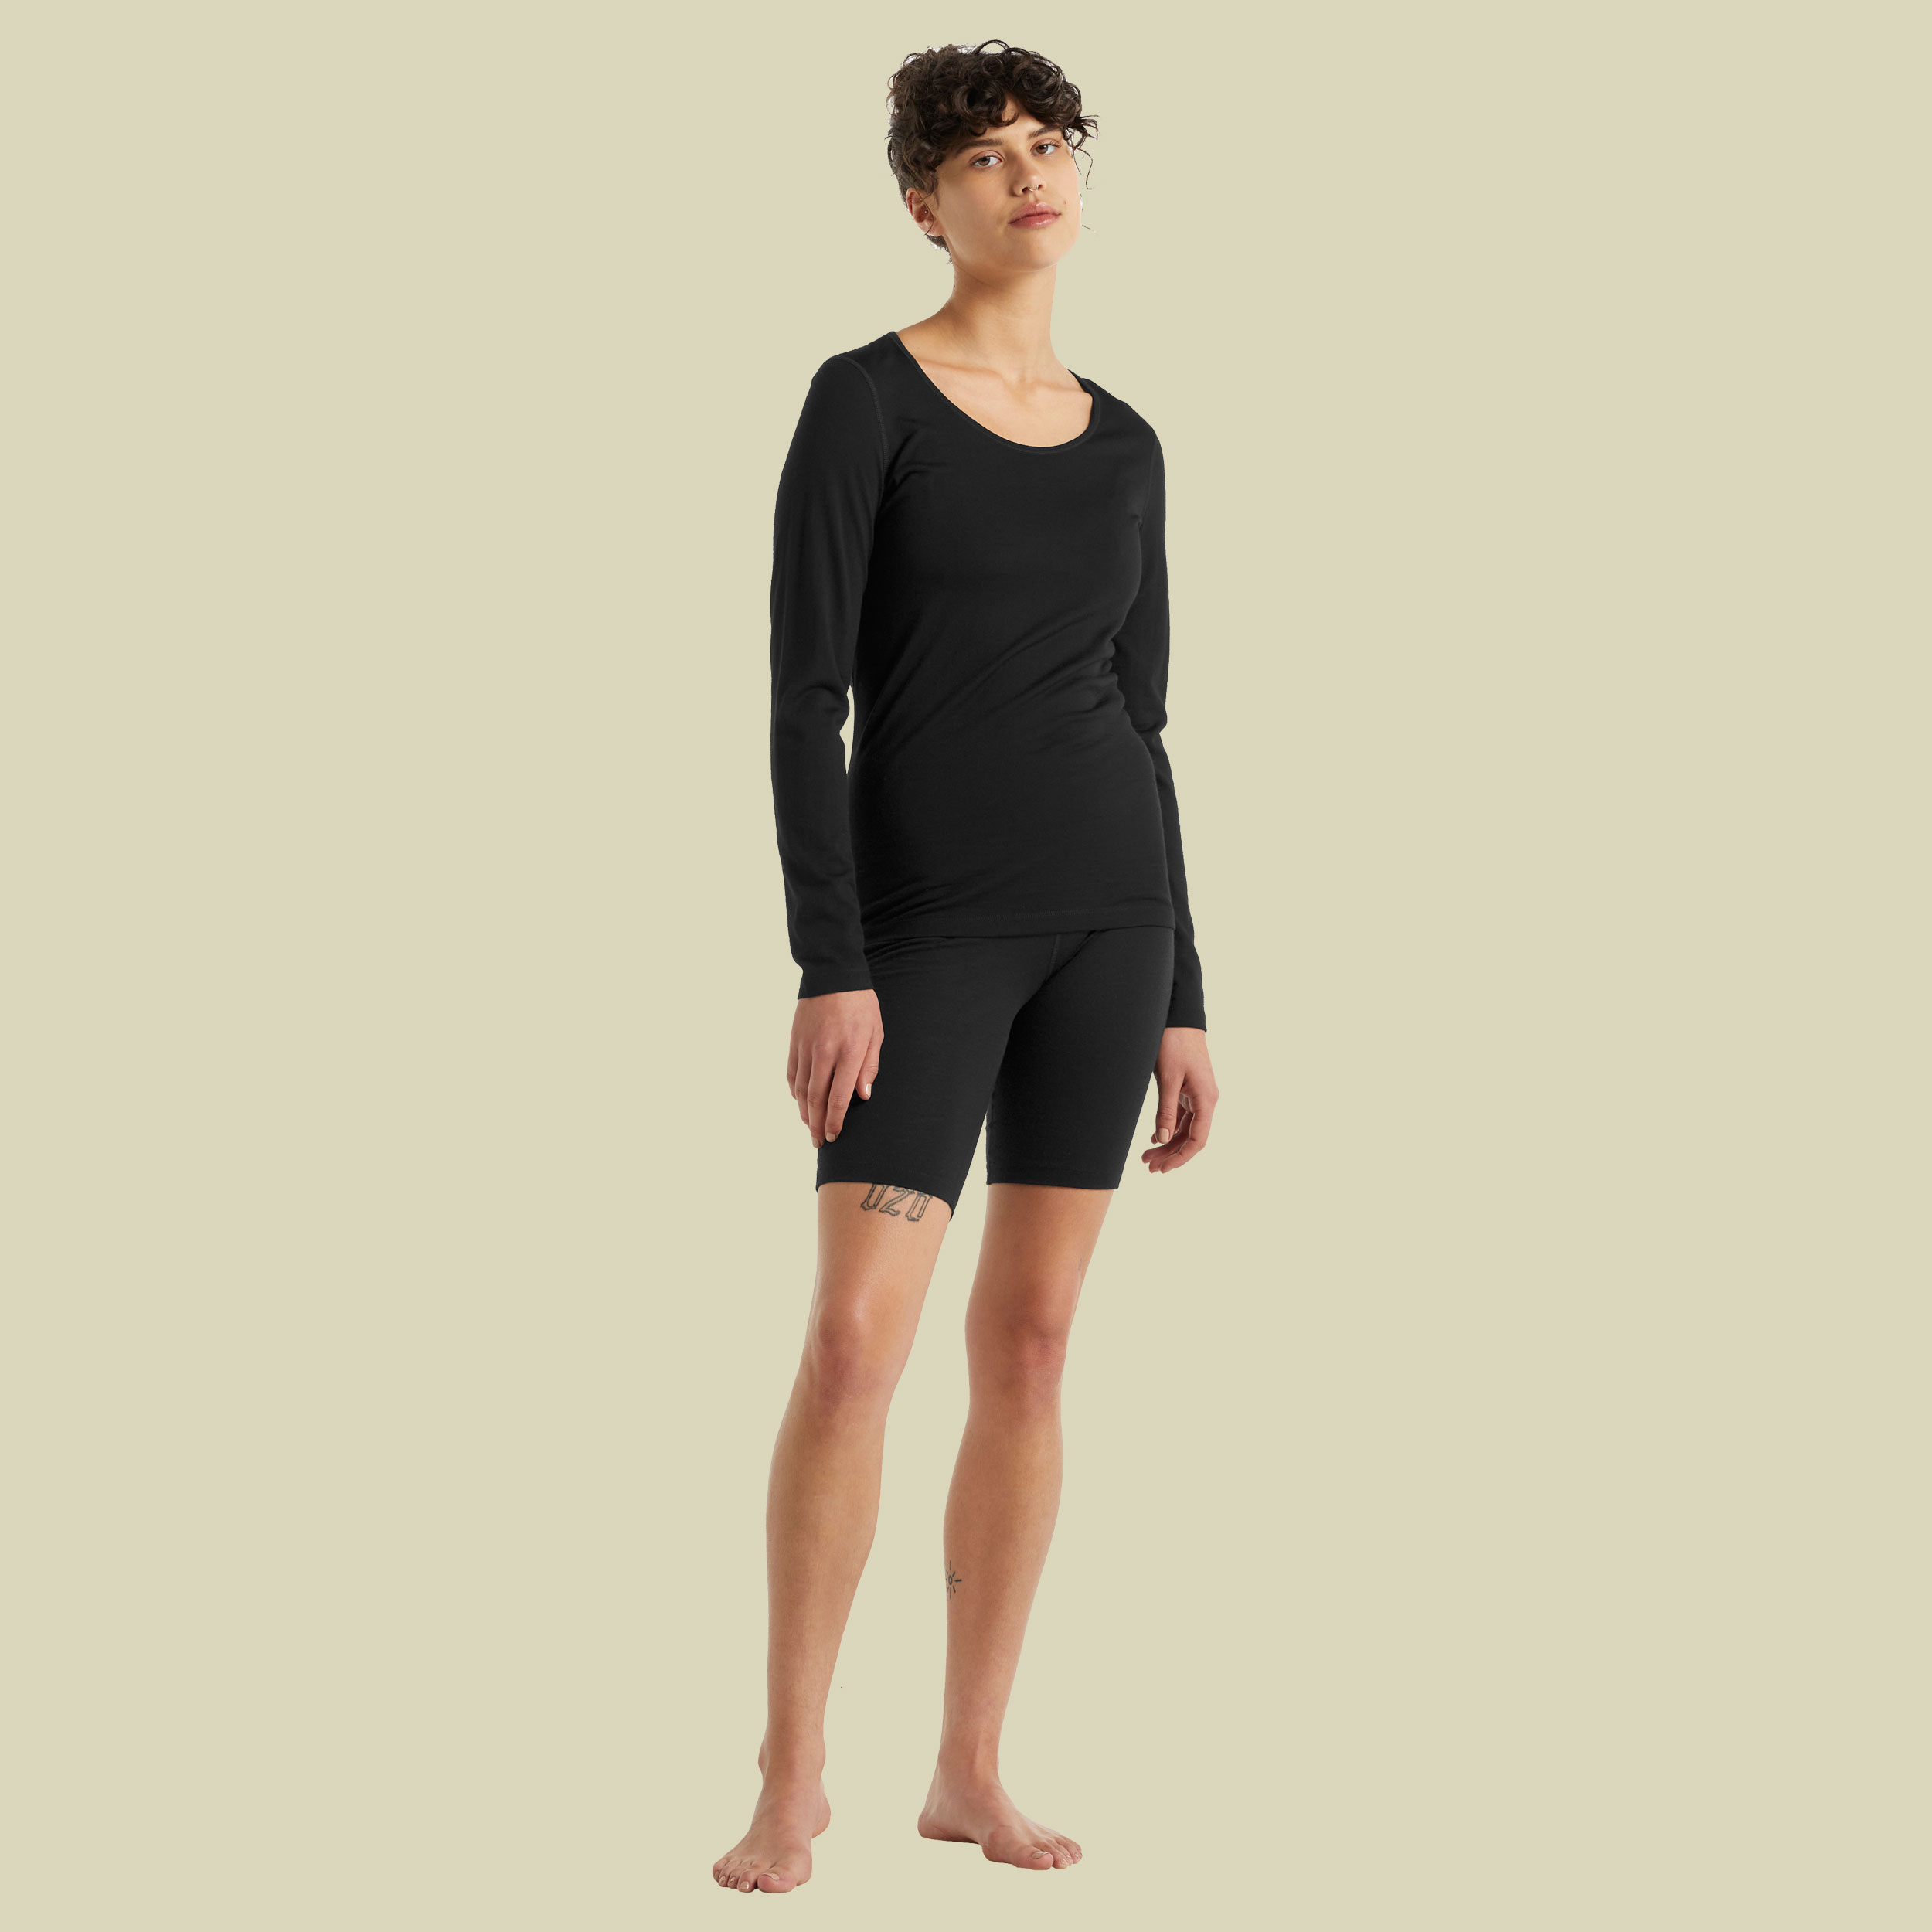 200 Oasis Shorts Women Größe S Farbe black